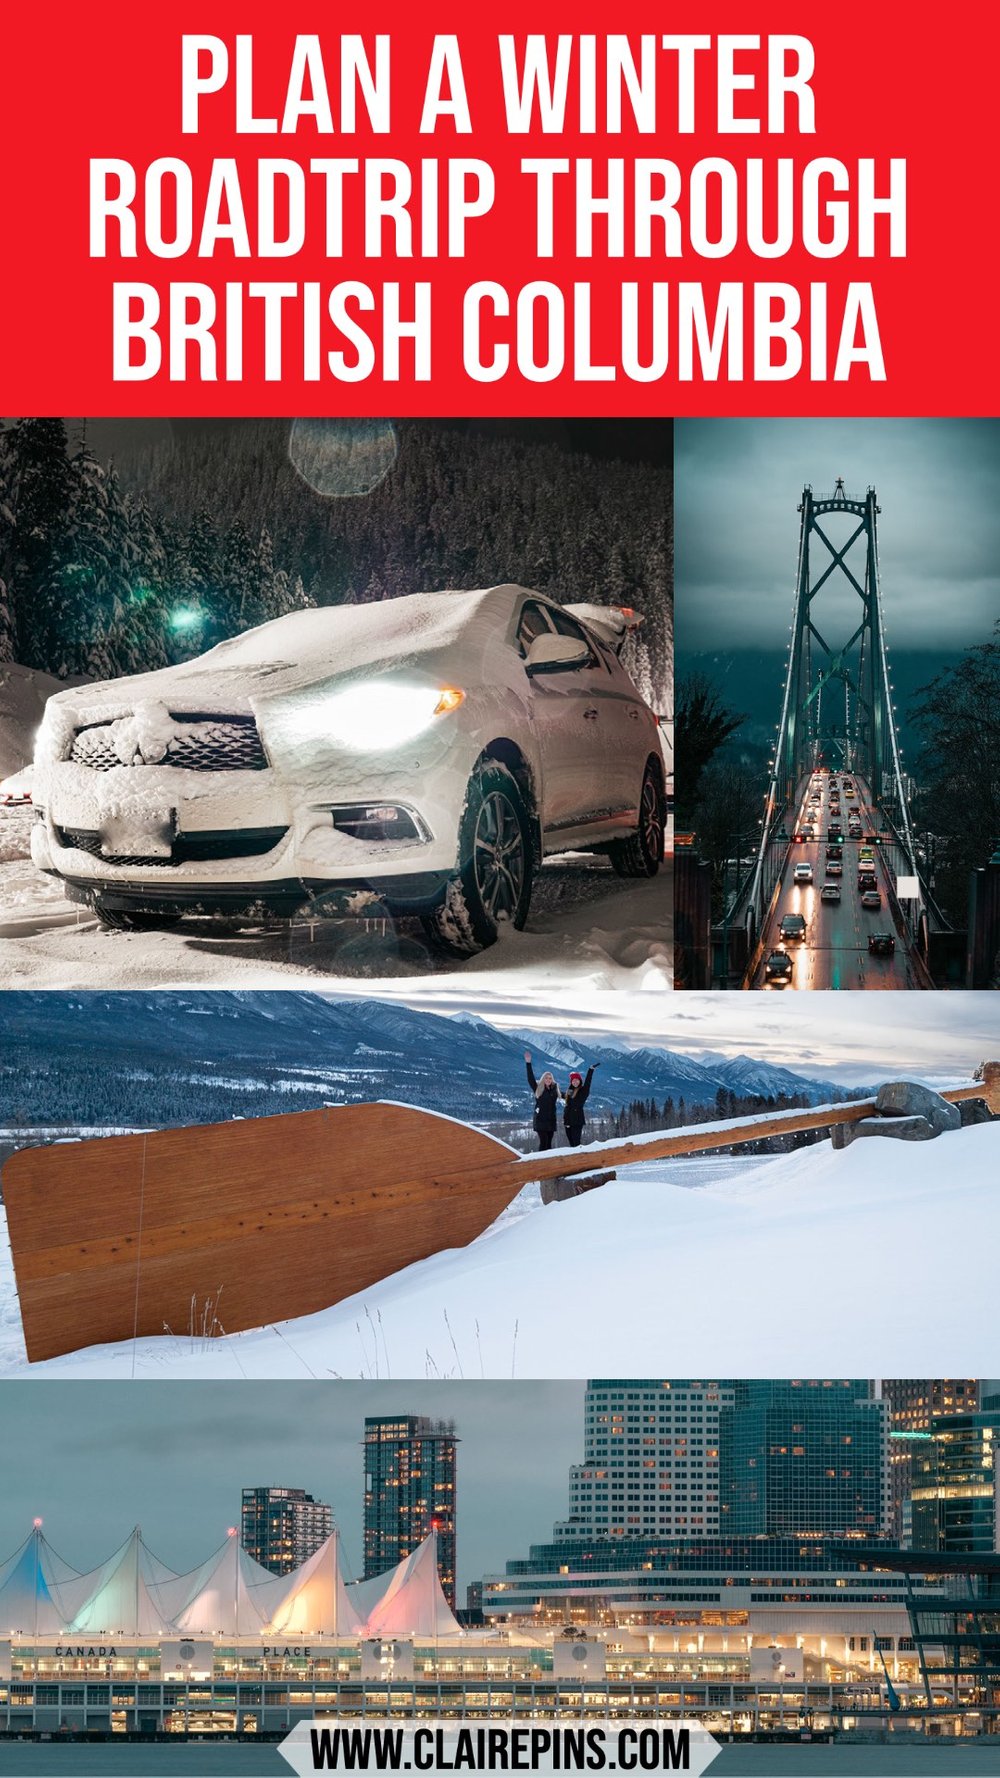 Plan a winter roadtrip through British Columbia copy.jpg